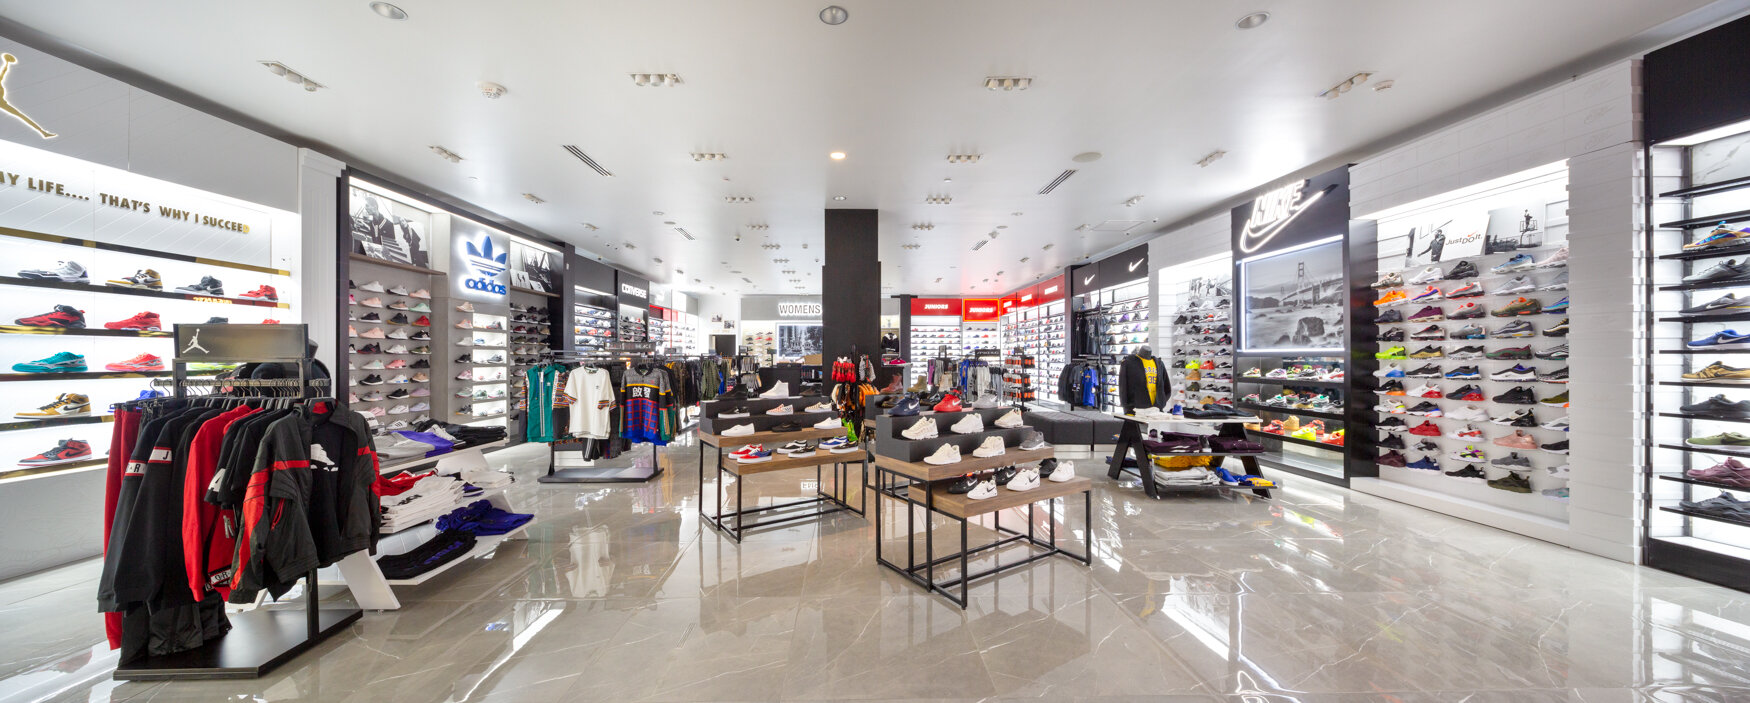 Sephora retail interiors by brightroomSF Interior photograohy-1.jpg